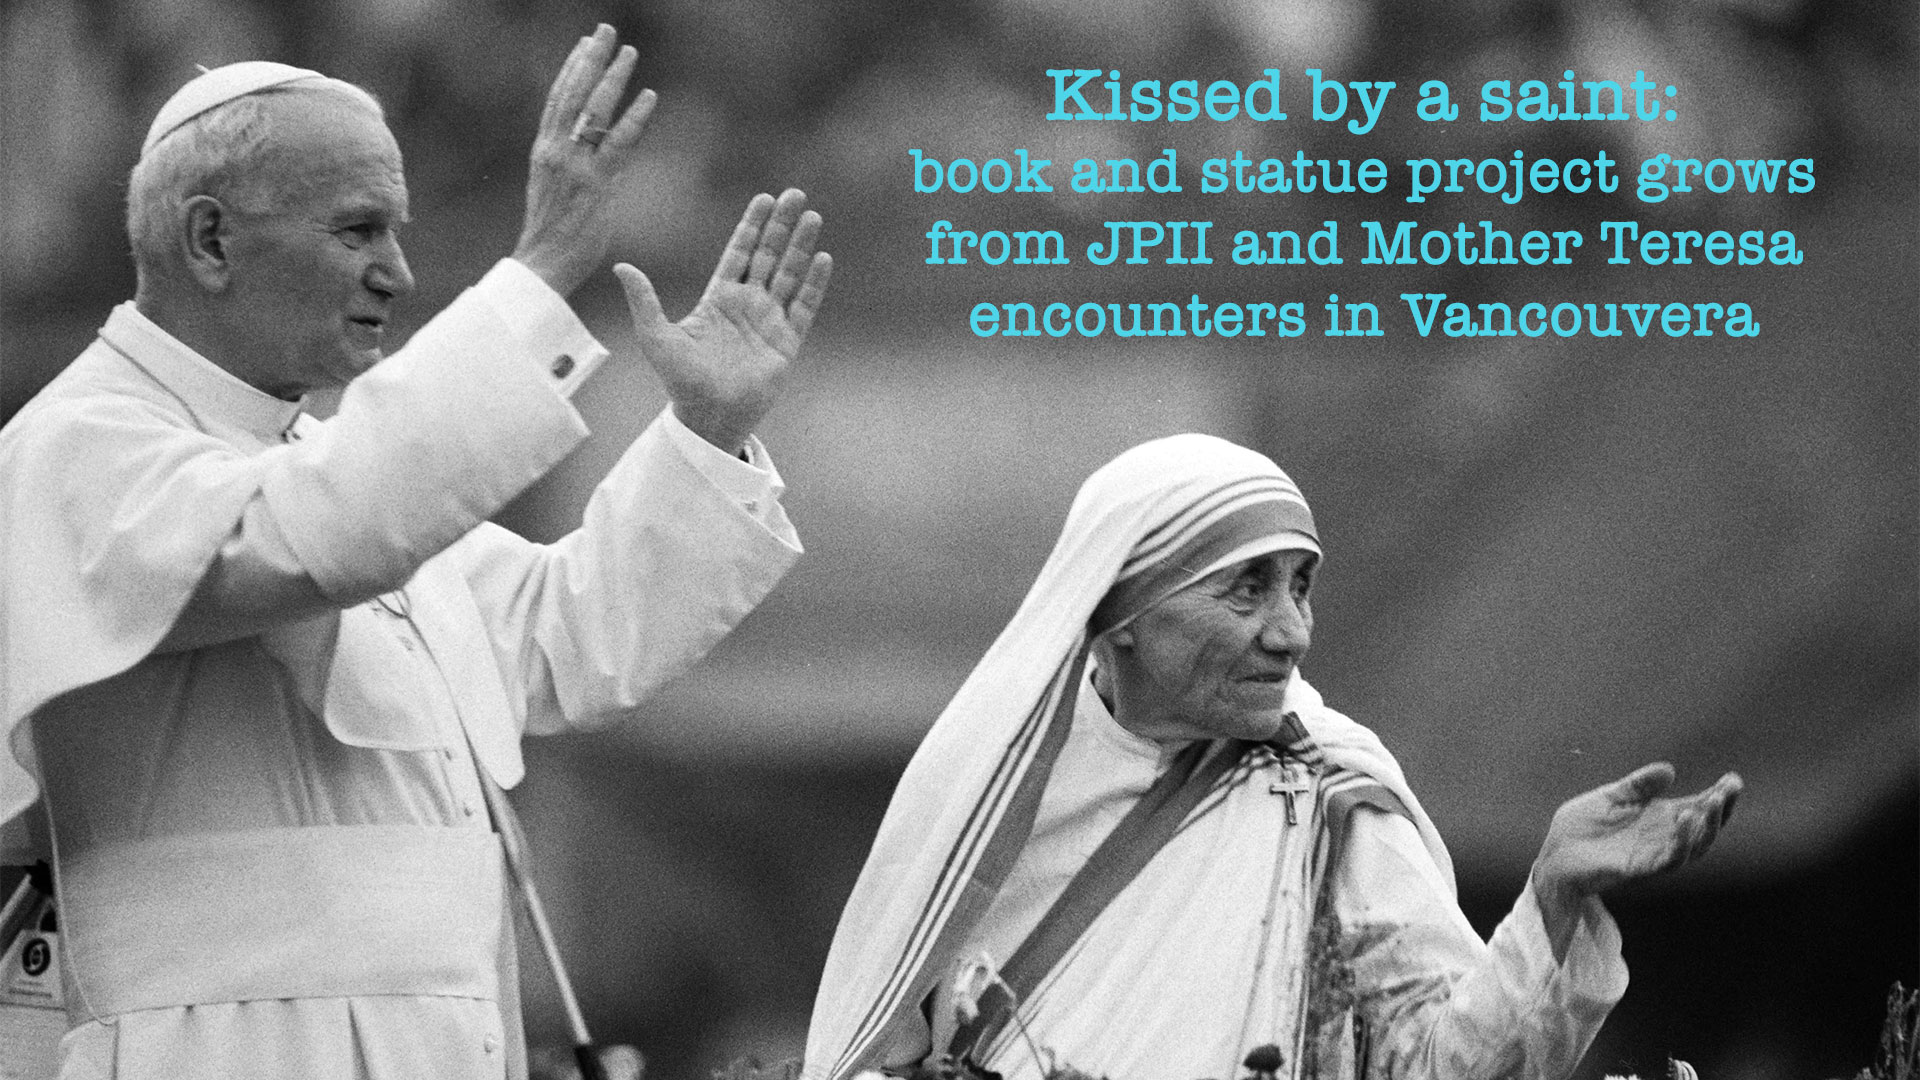 BC Catholic: Kissed by a saint